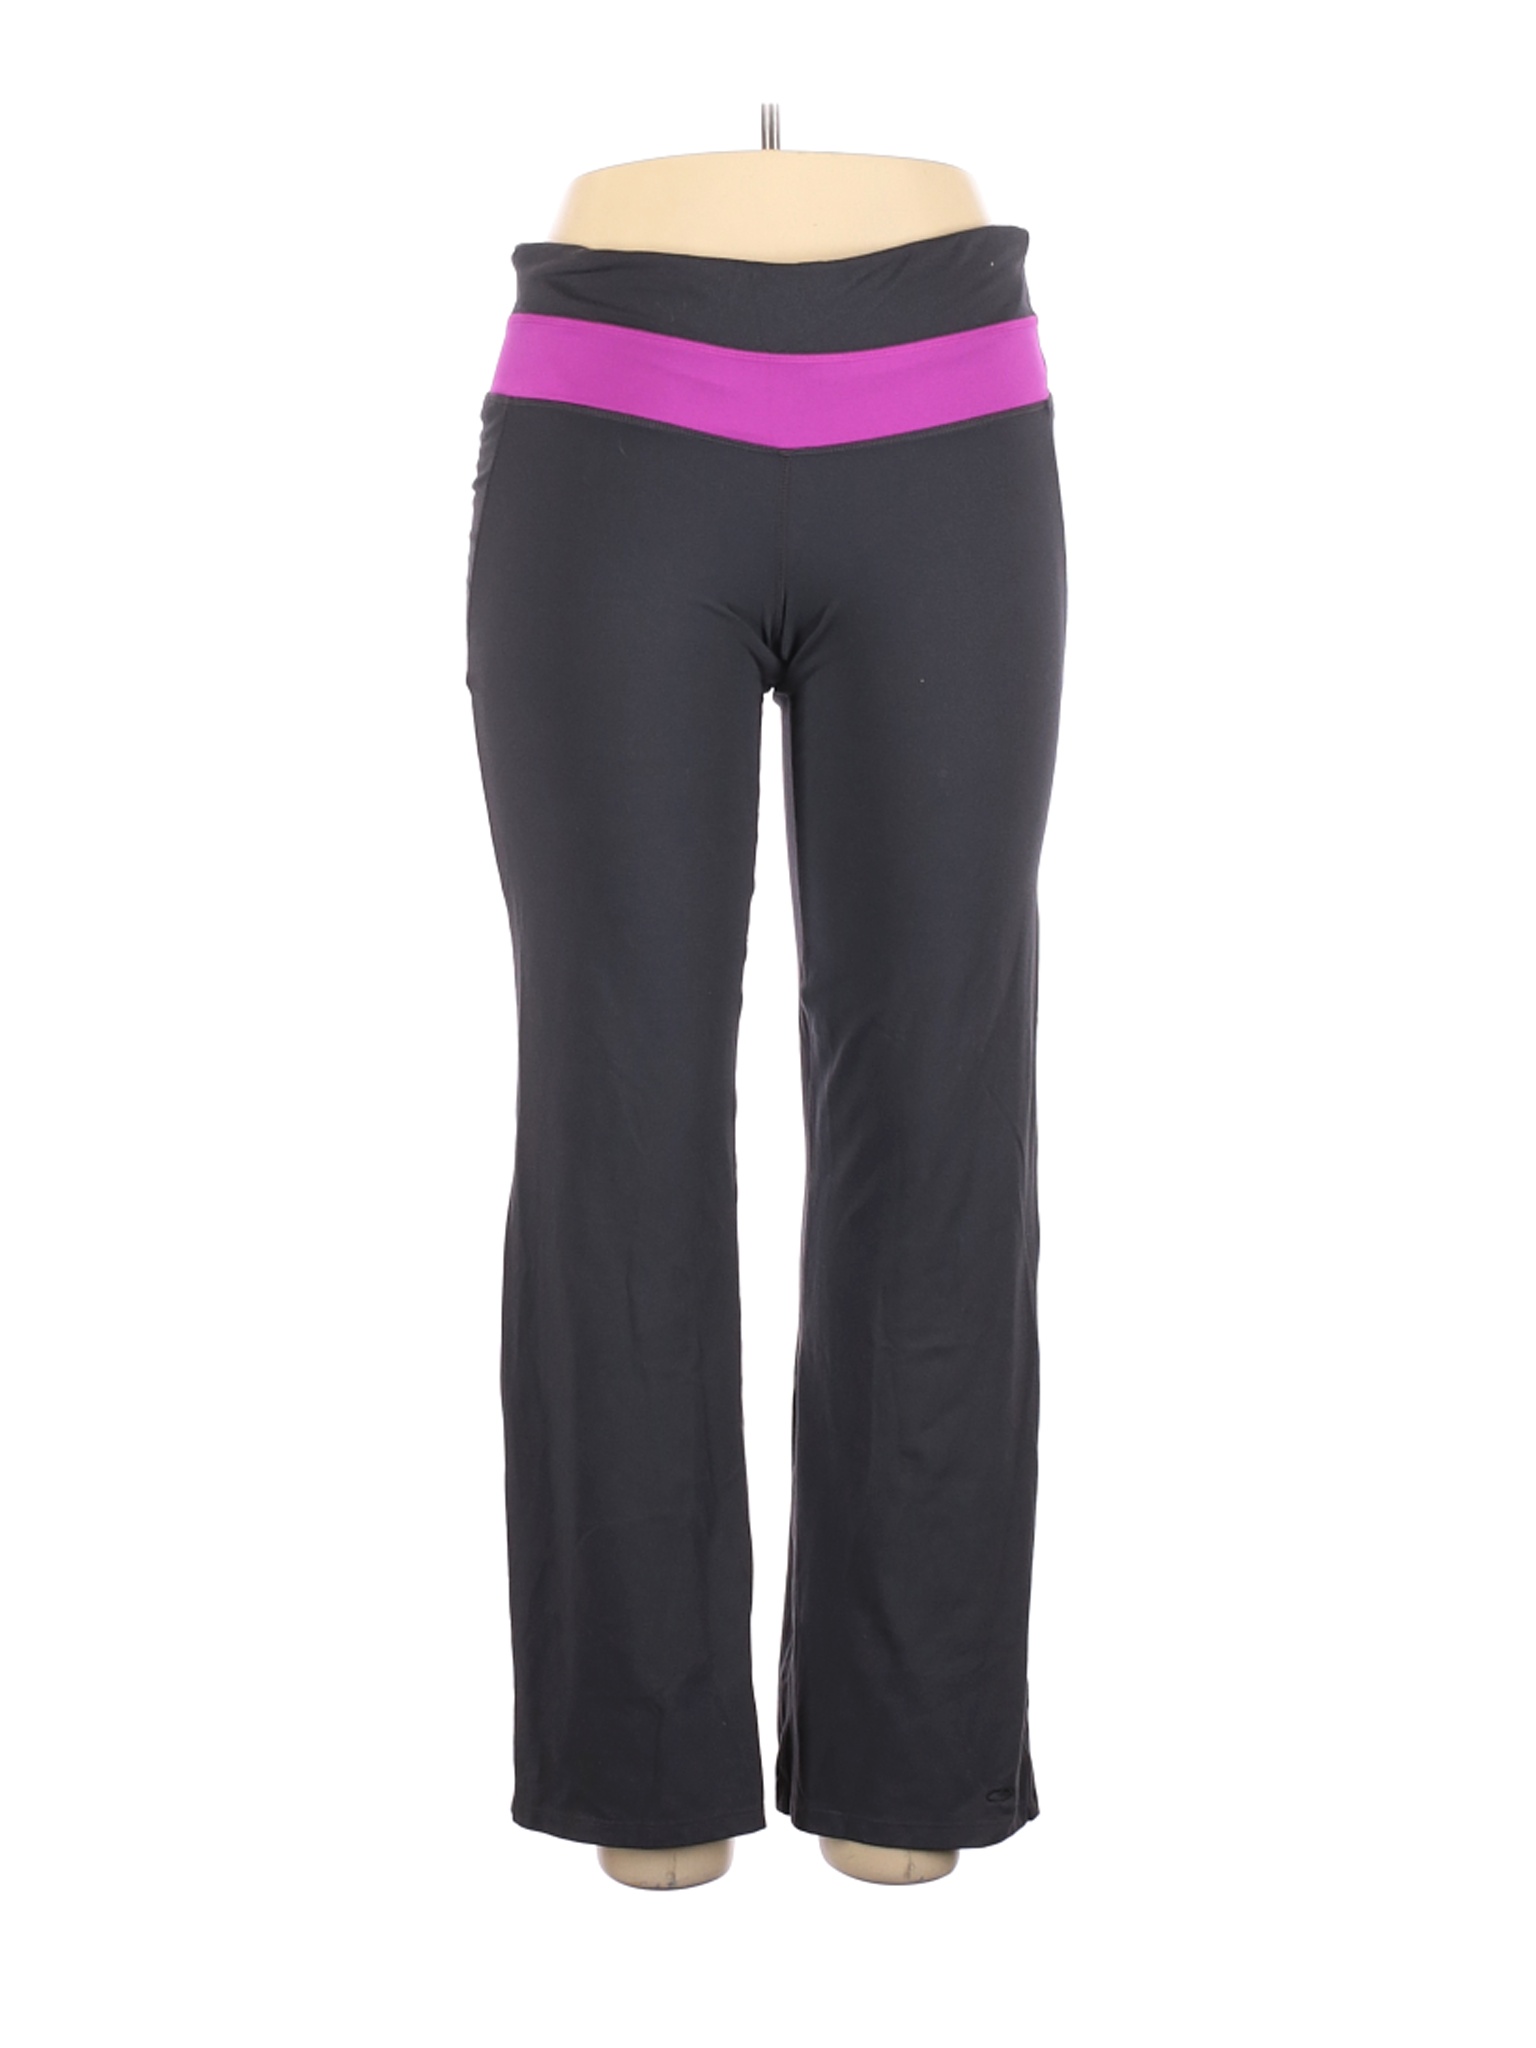 C9 Champion Women's Curvy Fit Yoga Pant (Short, Regular, & Long Inseams) 